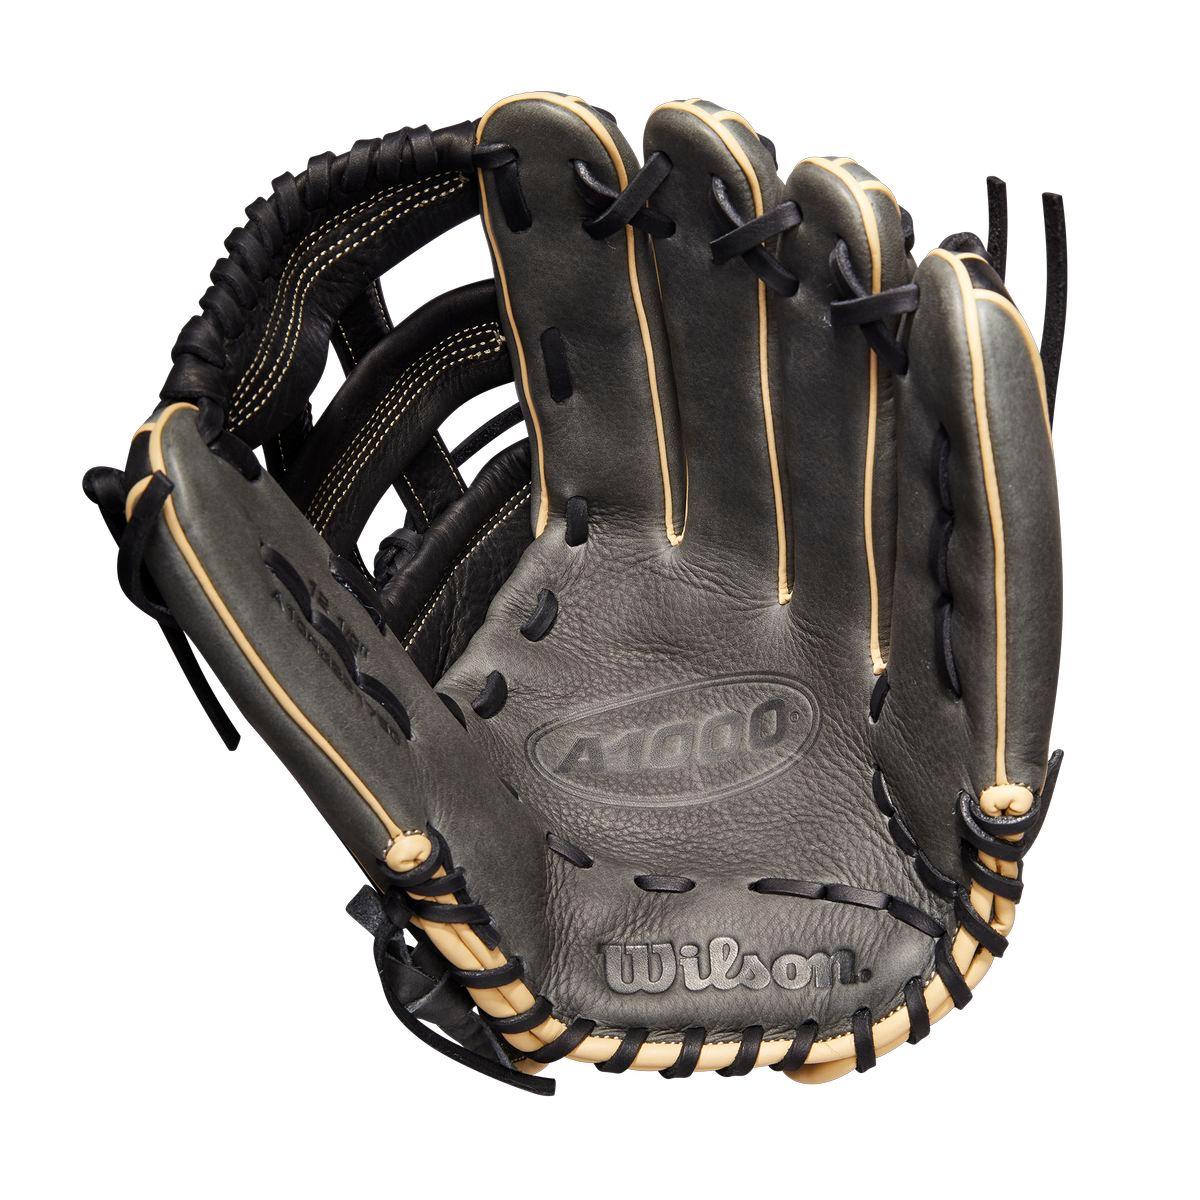 A1000 1750 12.5" Senior Baseball Glove - Sports Excellence